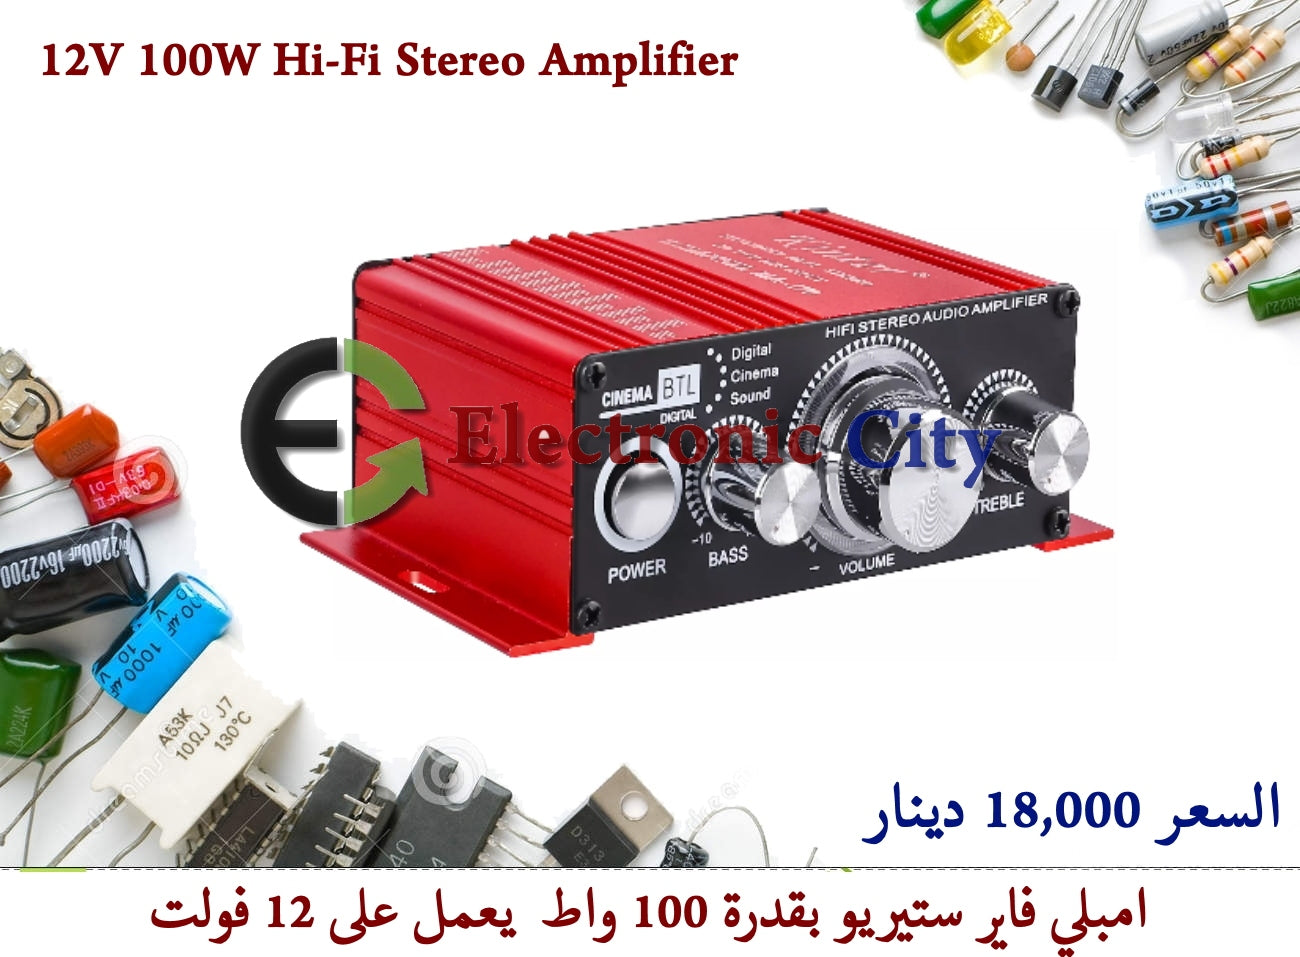 12V 100W Hi-Fi Stereo Amplifier